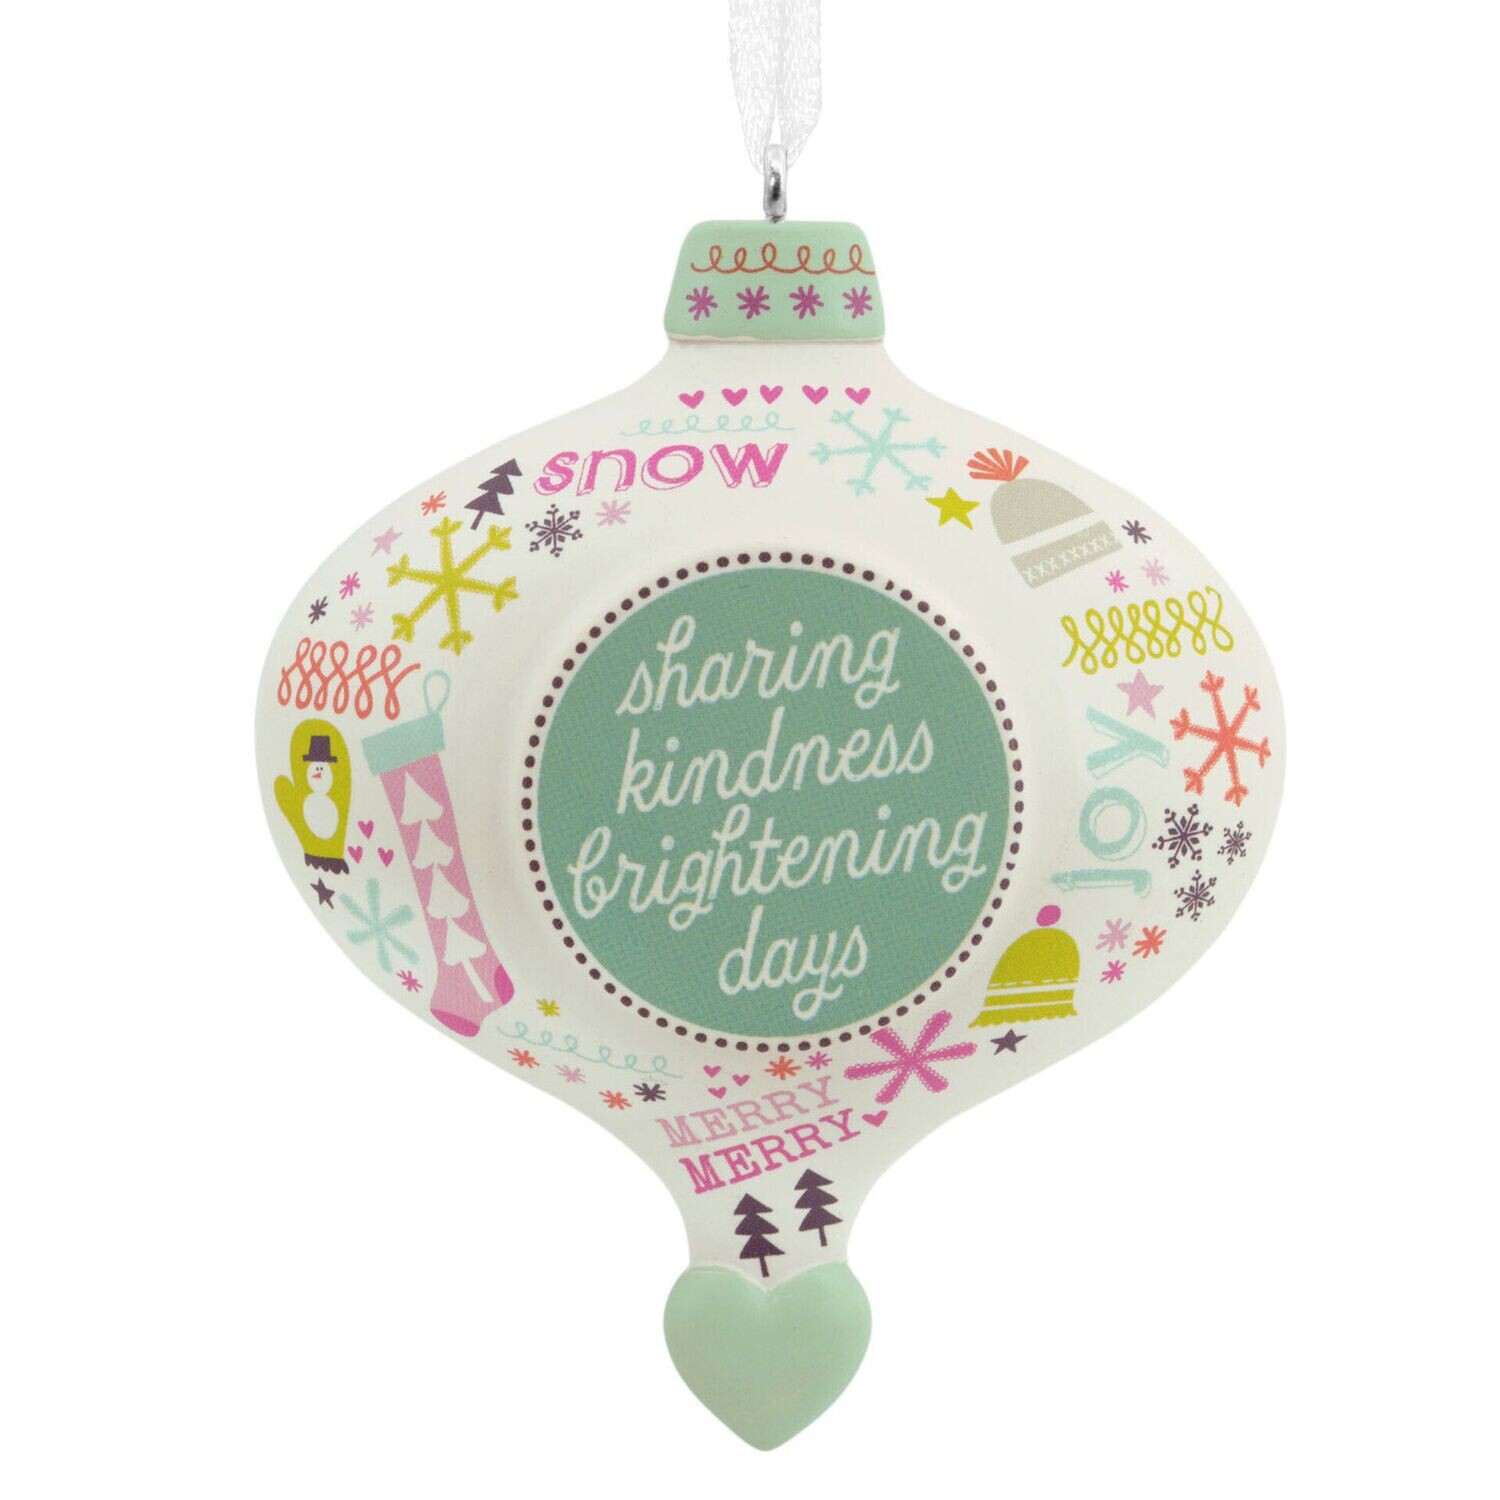 Sharing Kindness Brightening Days Caregiver Hallmark Ornament+